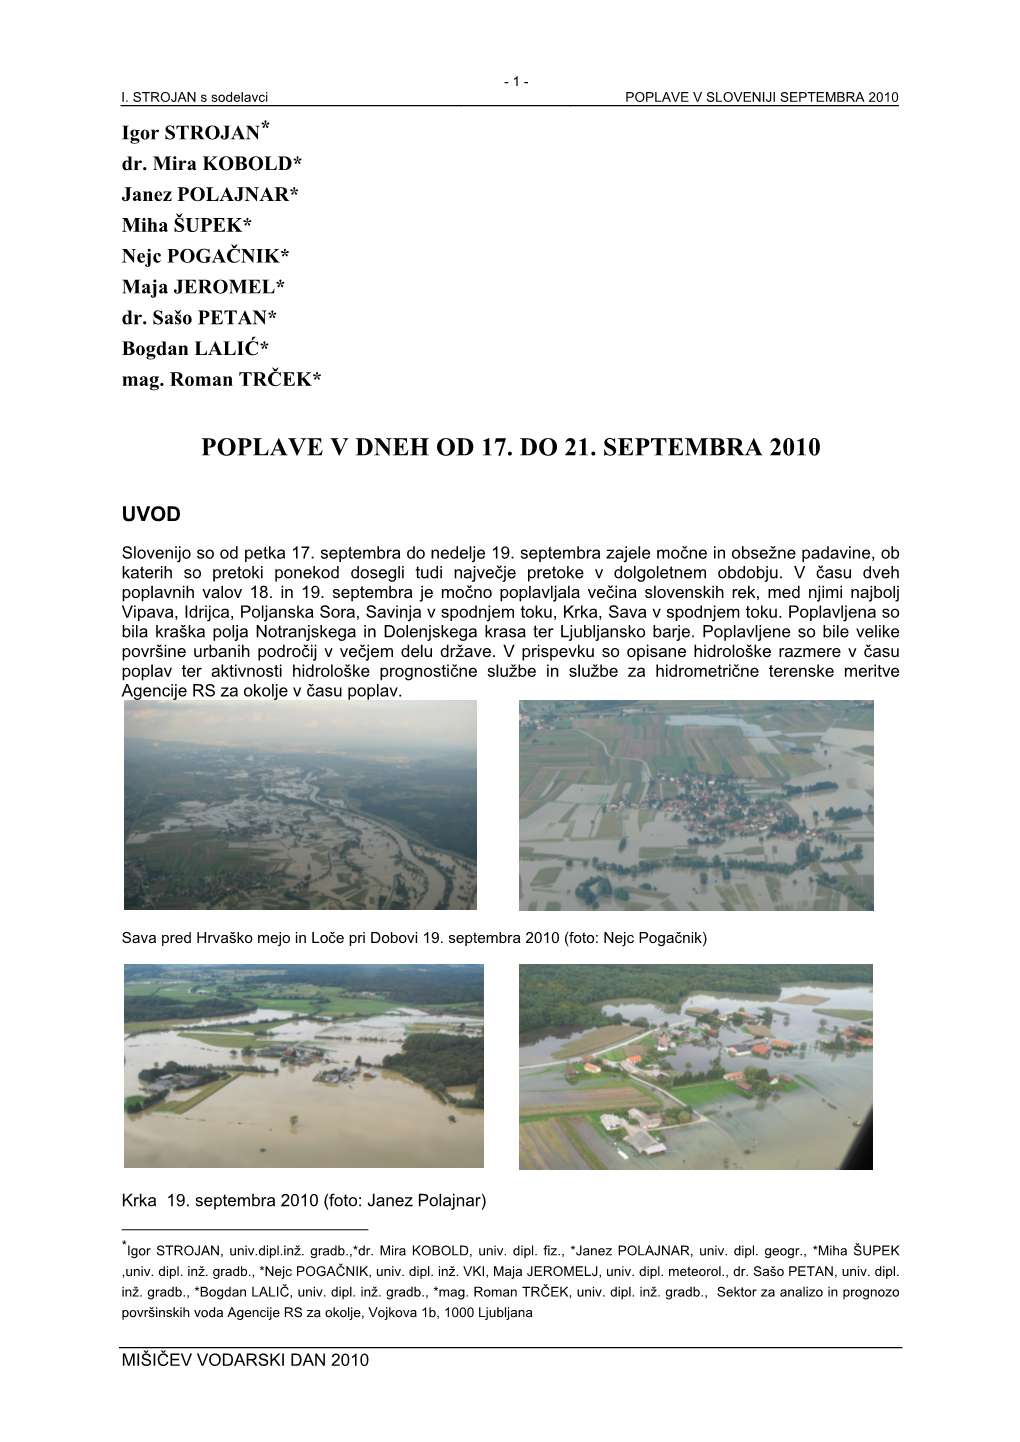 Poplave V Dneh Od 17. Do 21. Septembra 2010